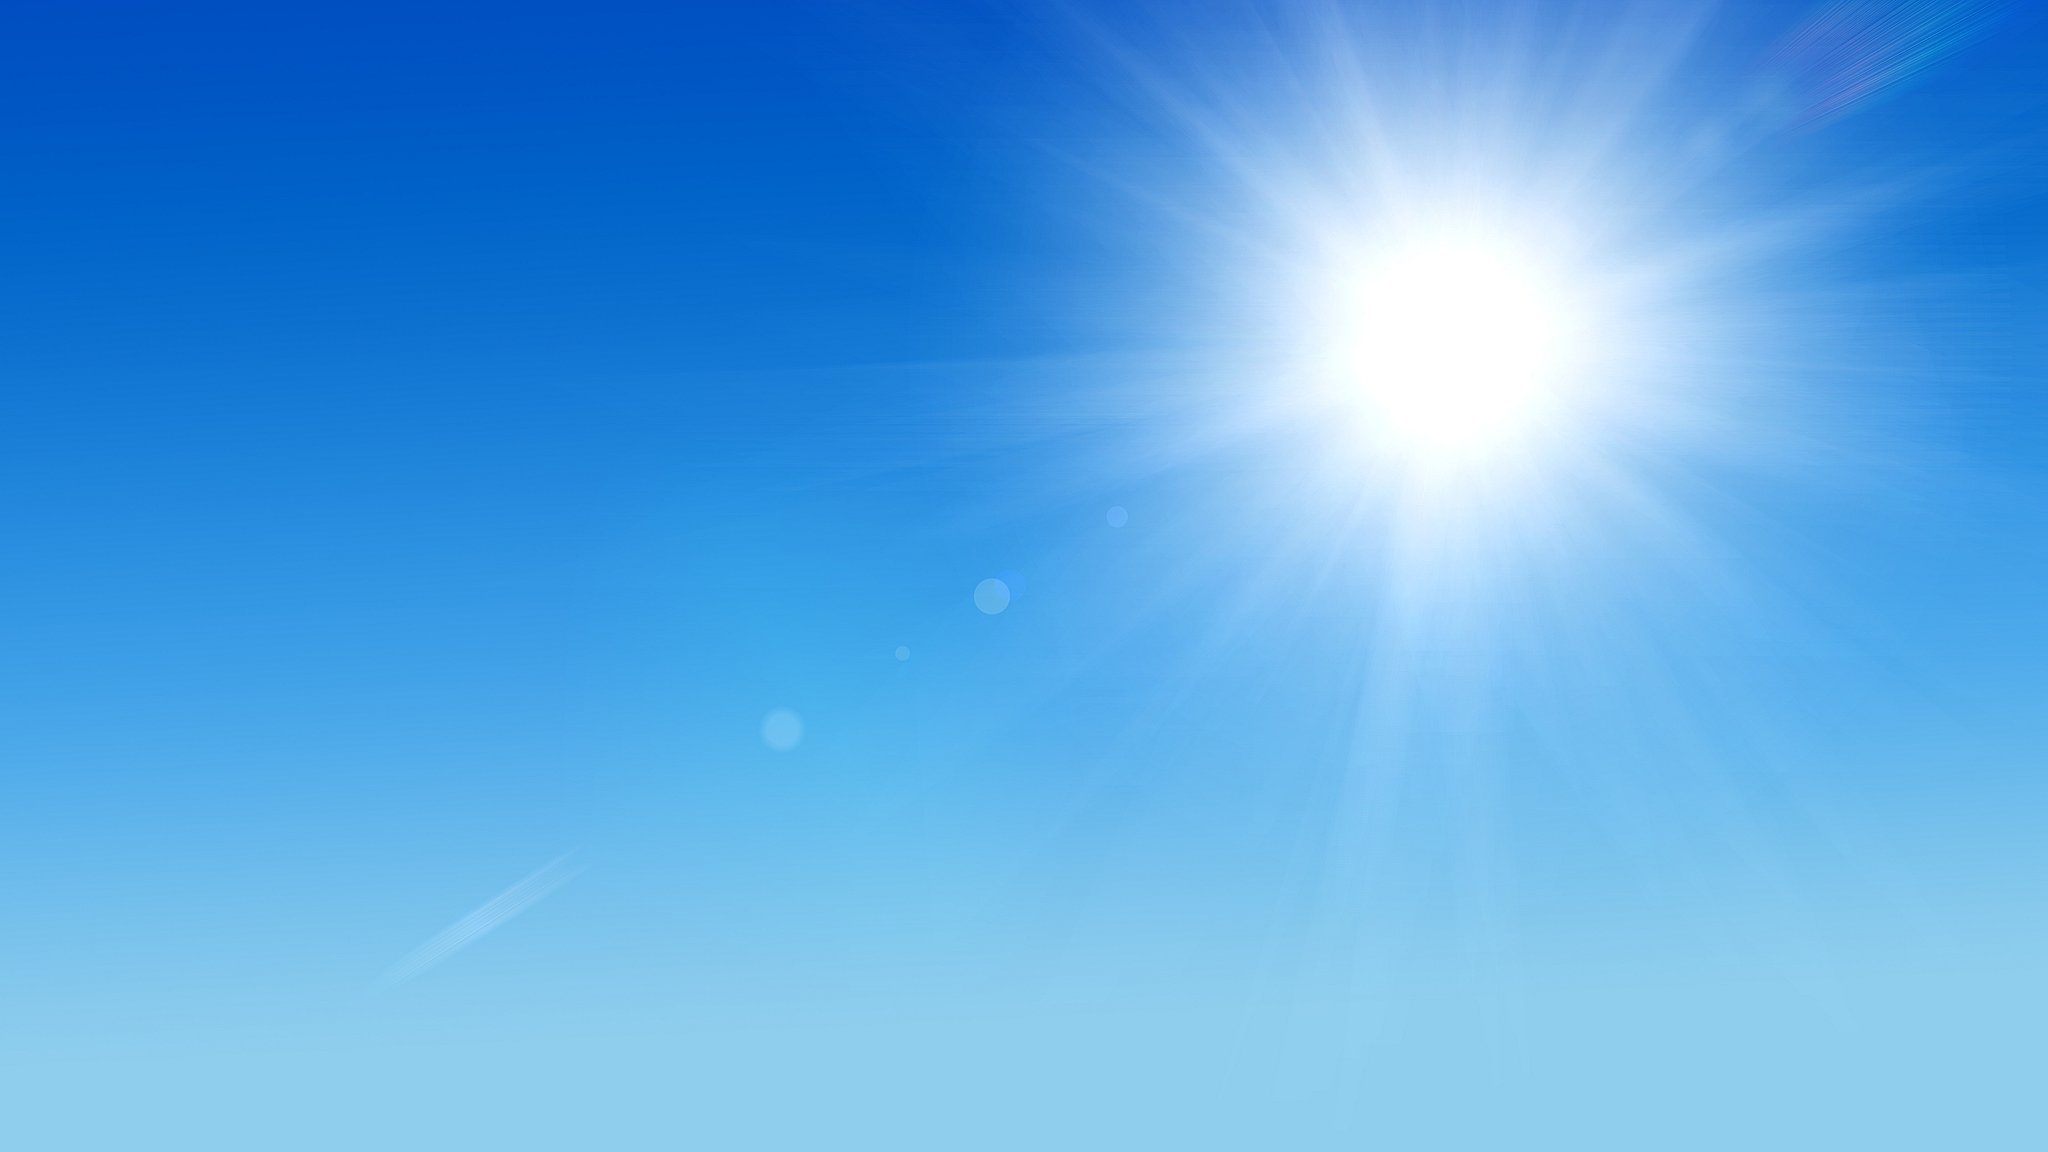 Meteo Ustica: oggi giovedì 10 Agosto prevalentemente sereno.